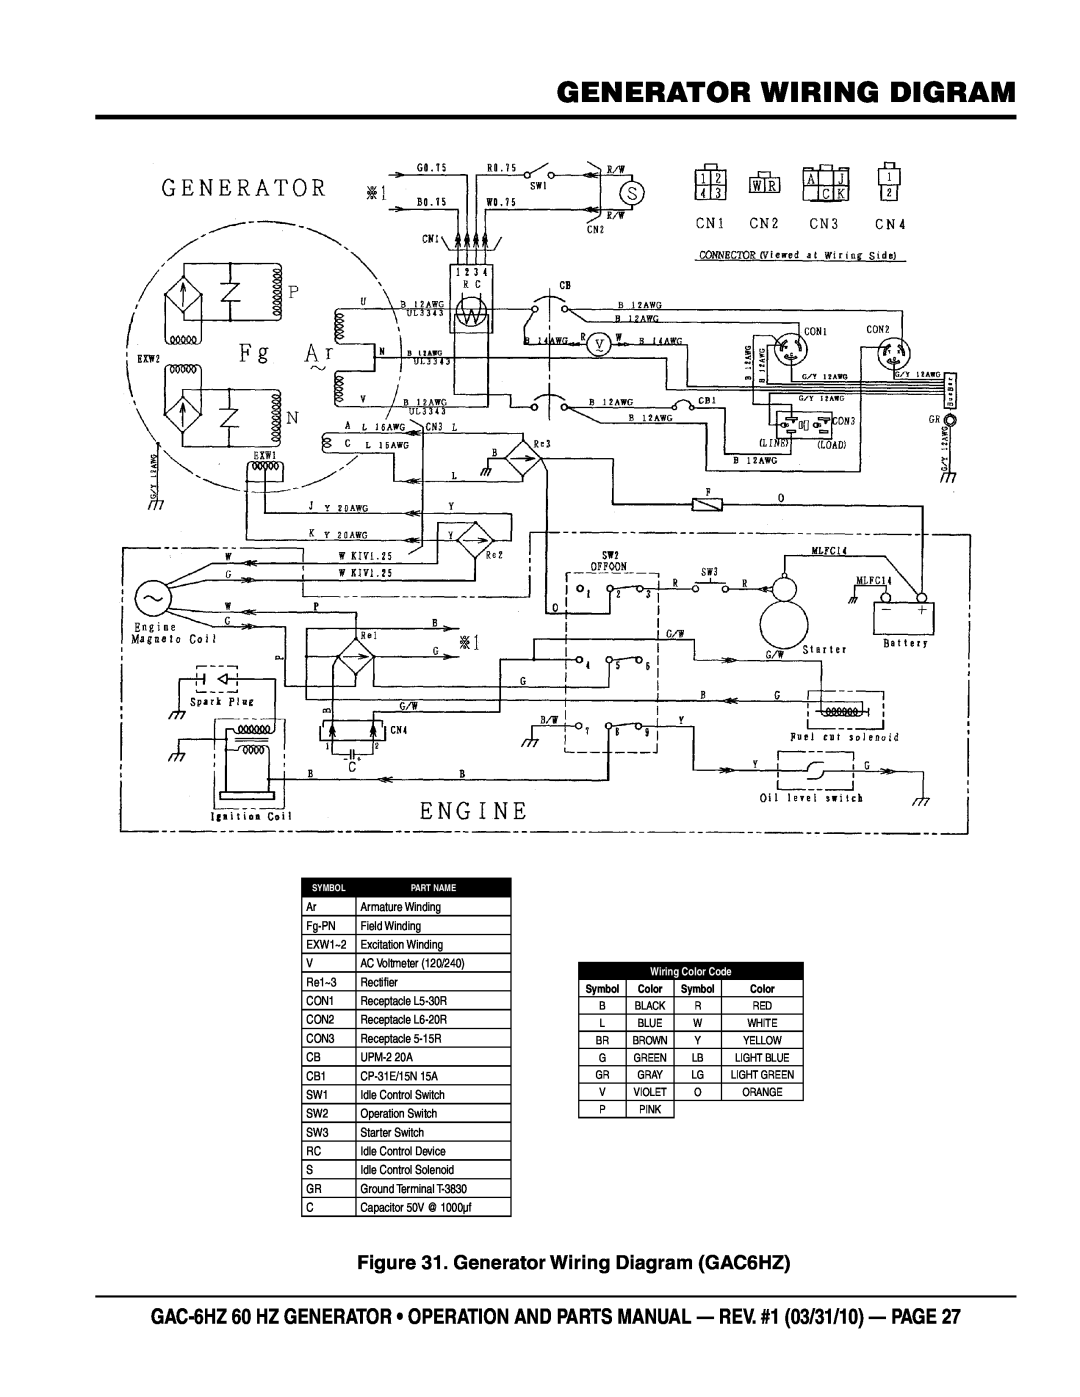 Multiquip manual generator wiring digram, Generator Wiring Diagram GAC6HZ, Wiring Color Code 